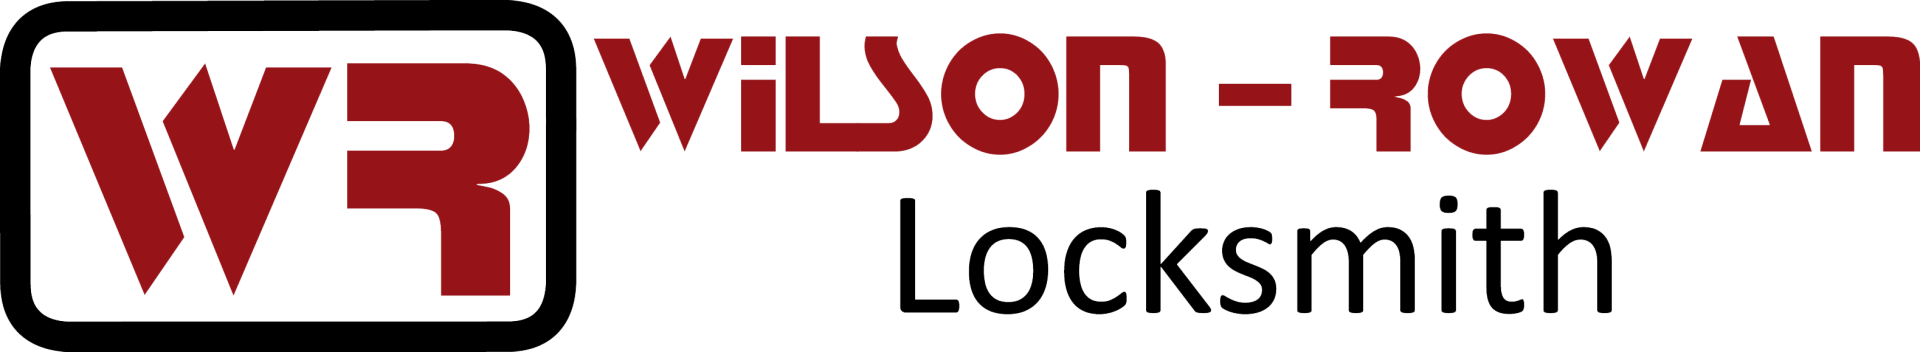 Wilson Rowan Locksmith - Logo